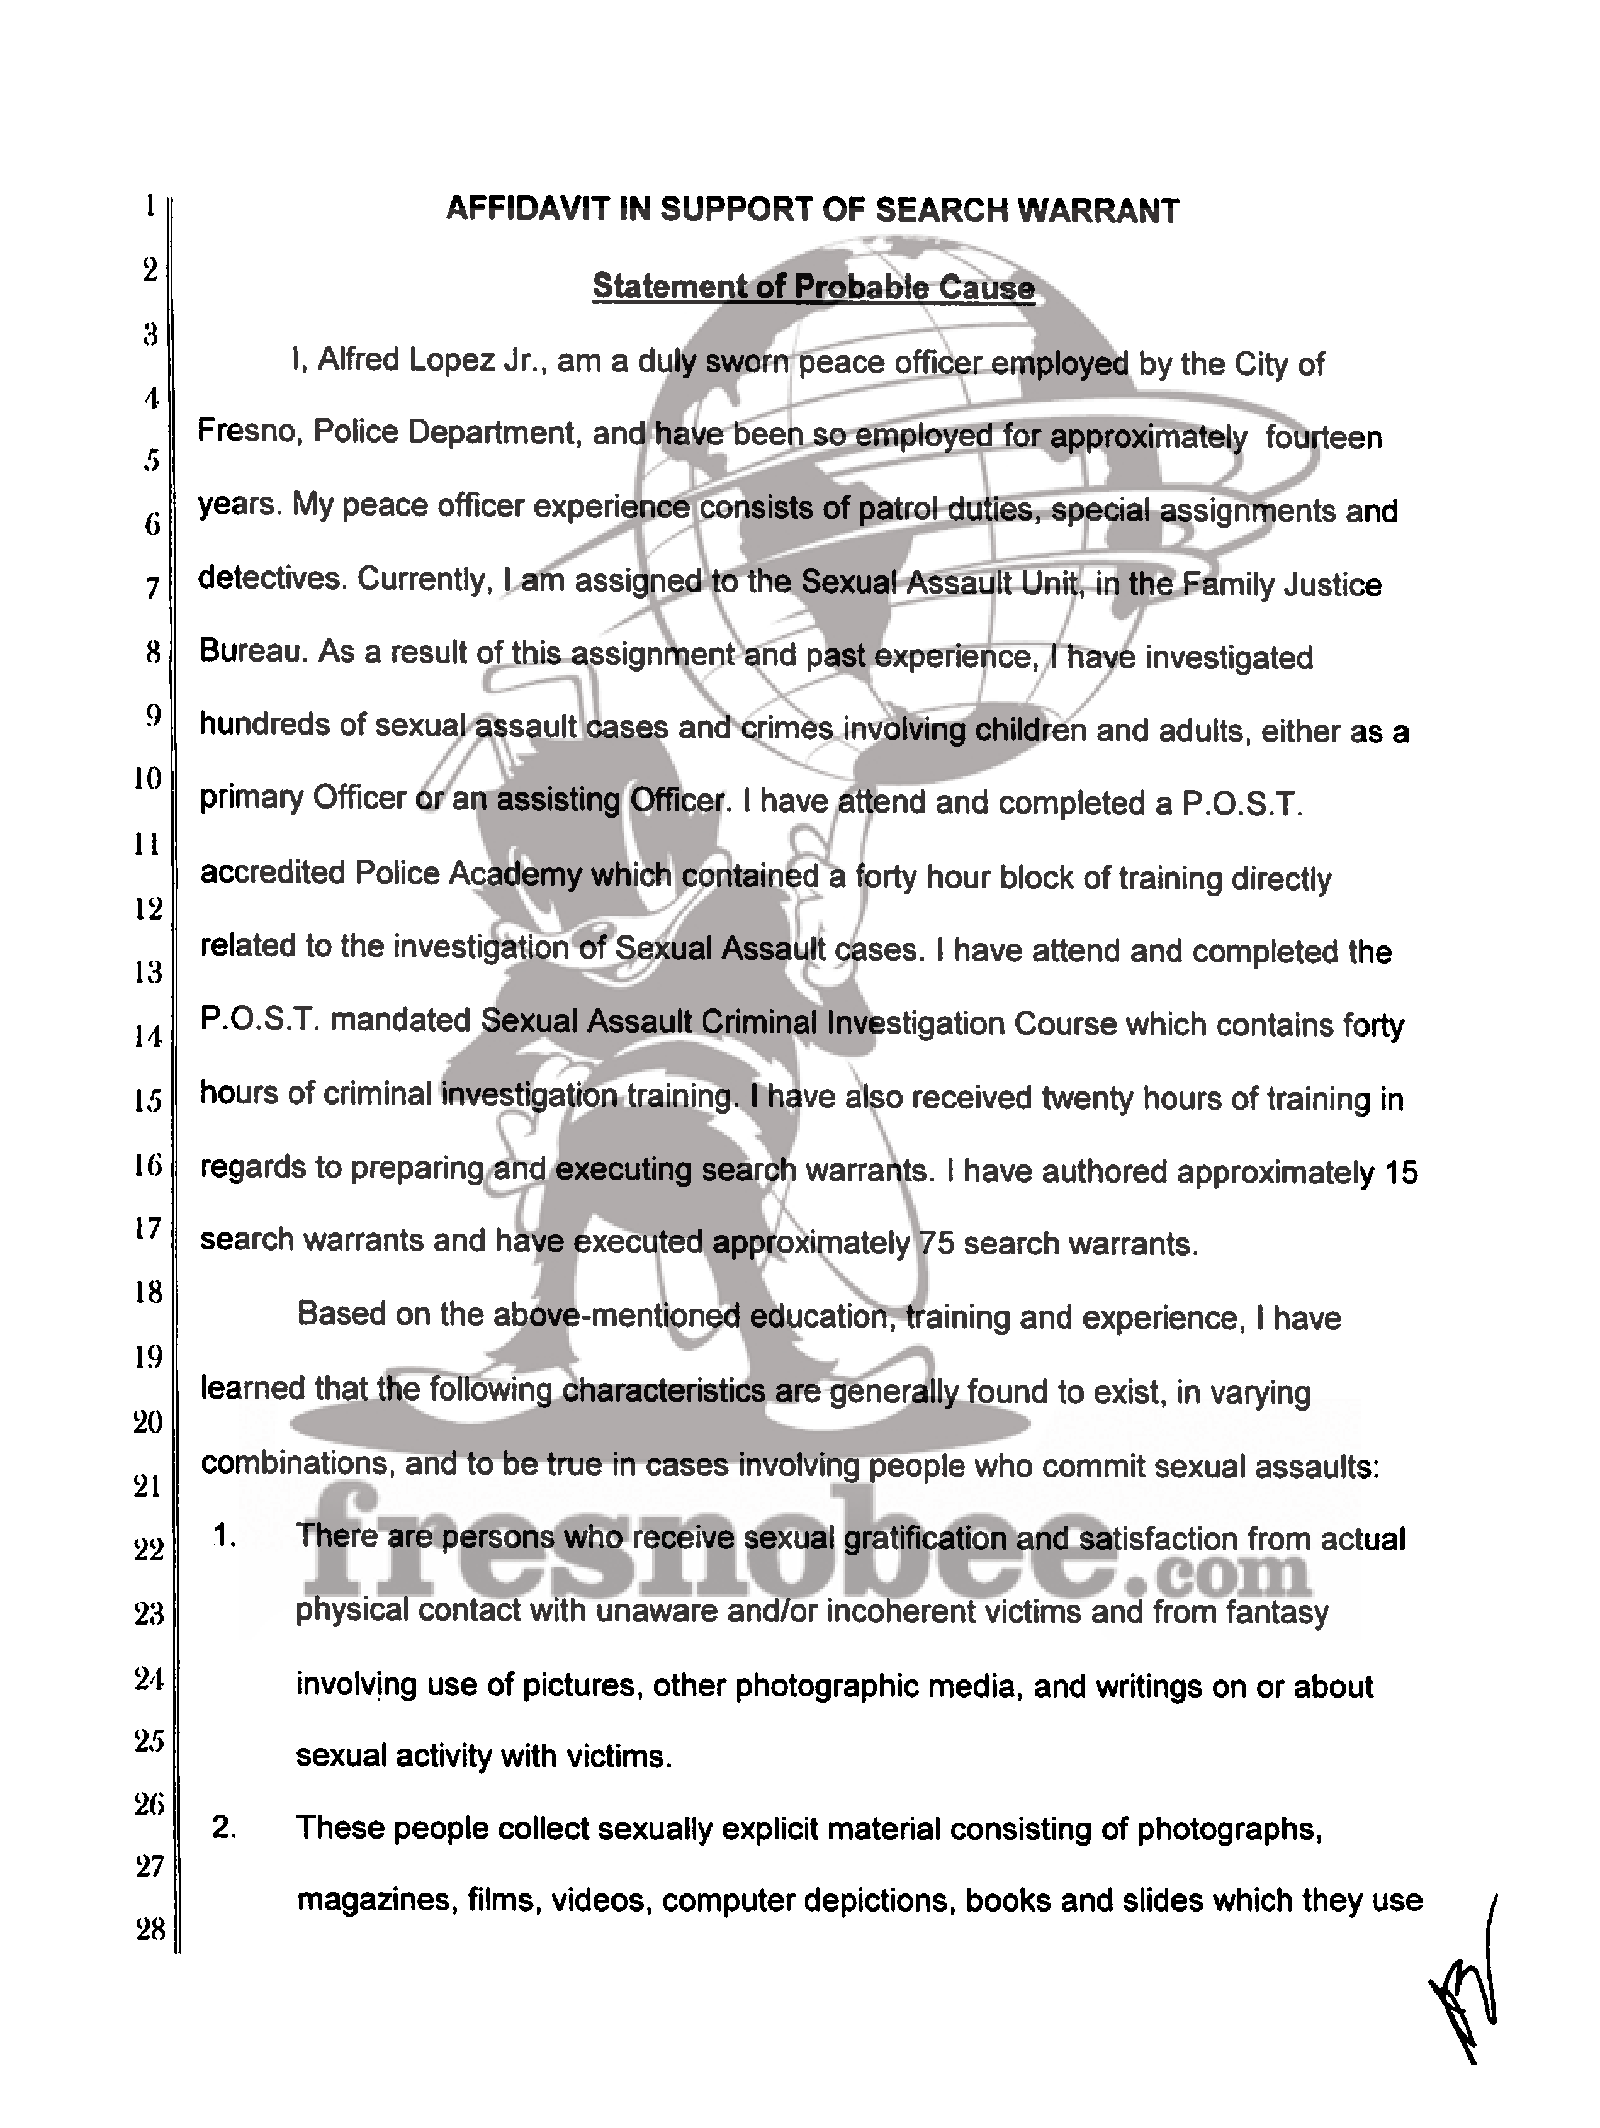 Copy of denman megan search warrant affidavit2.png